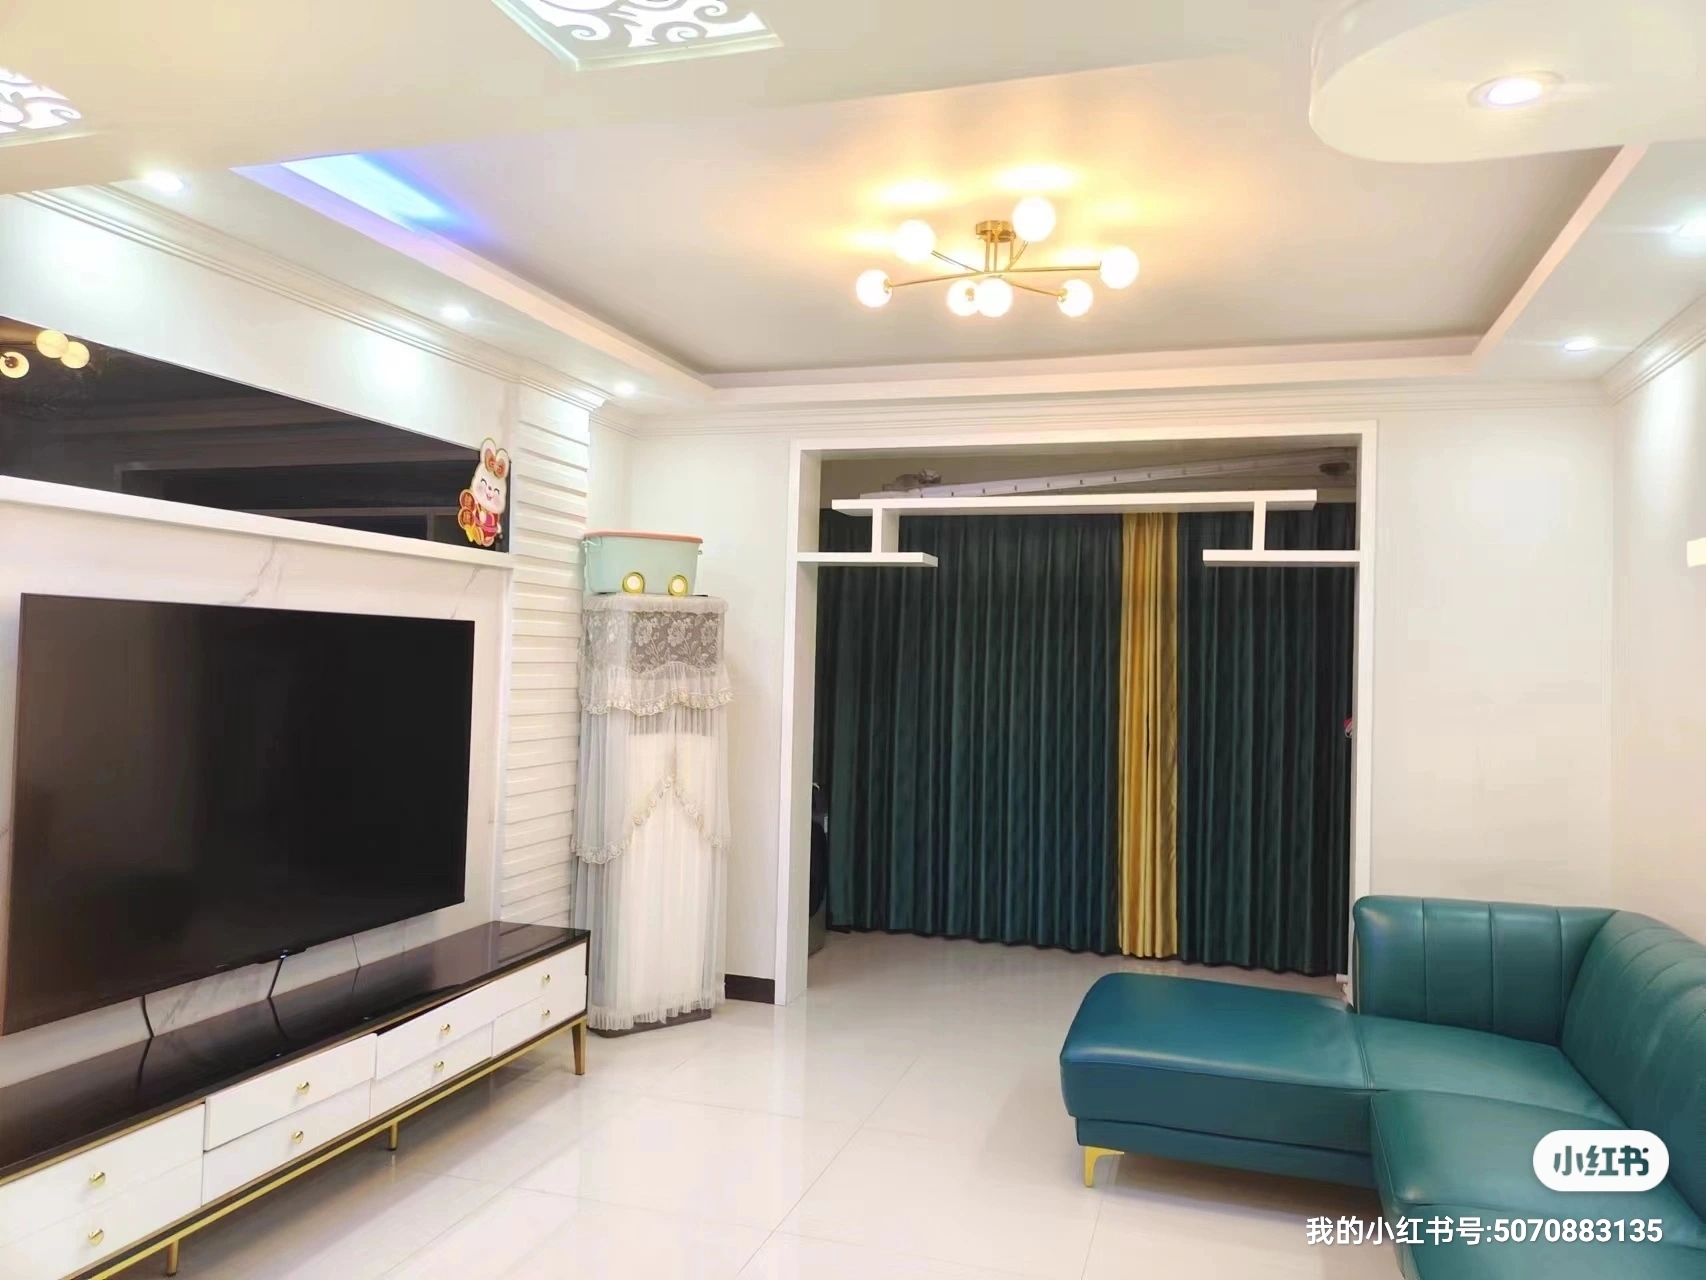 Changsha-Xingsha-Cozy Home,Clean&Comfy,No Gender Limit,Hustle & Bustle